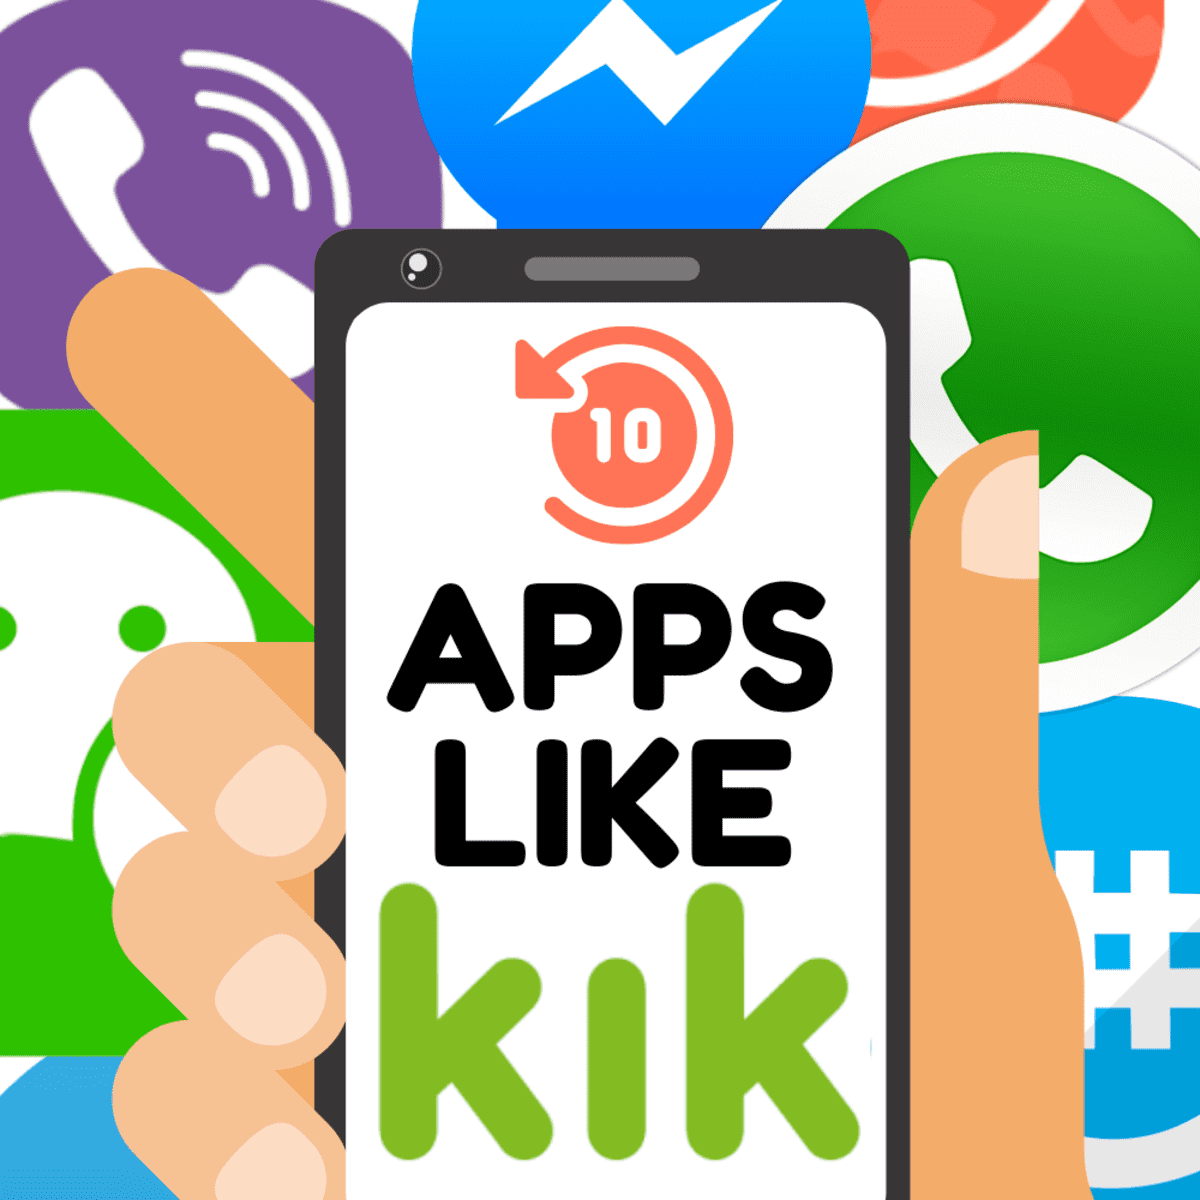 ørn Fisker par The 10 Best Messaging Apps Like Kik! - TurboFuture